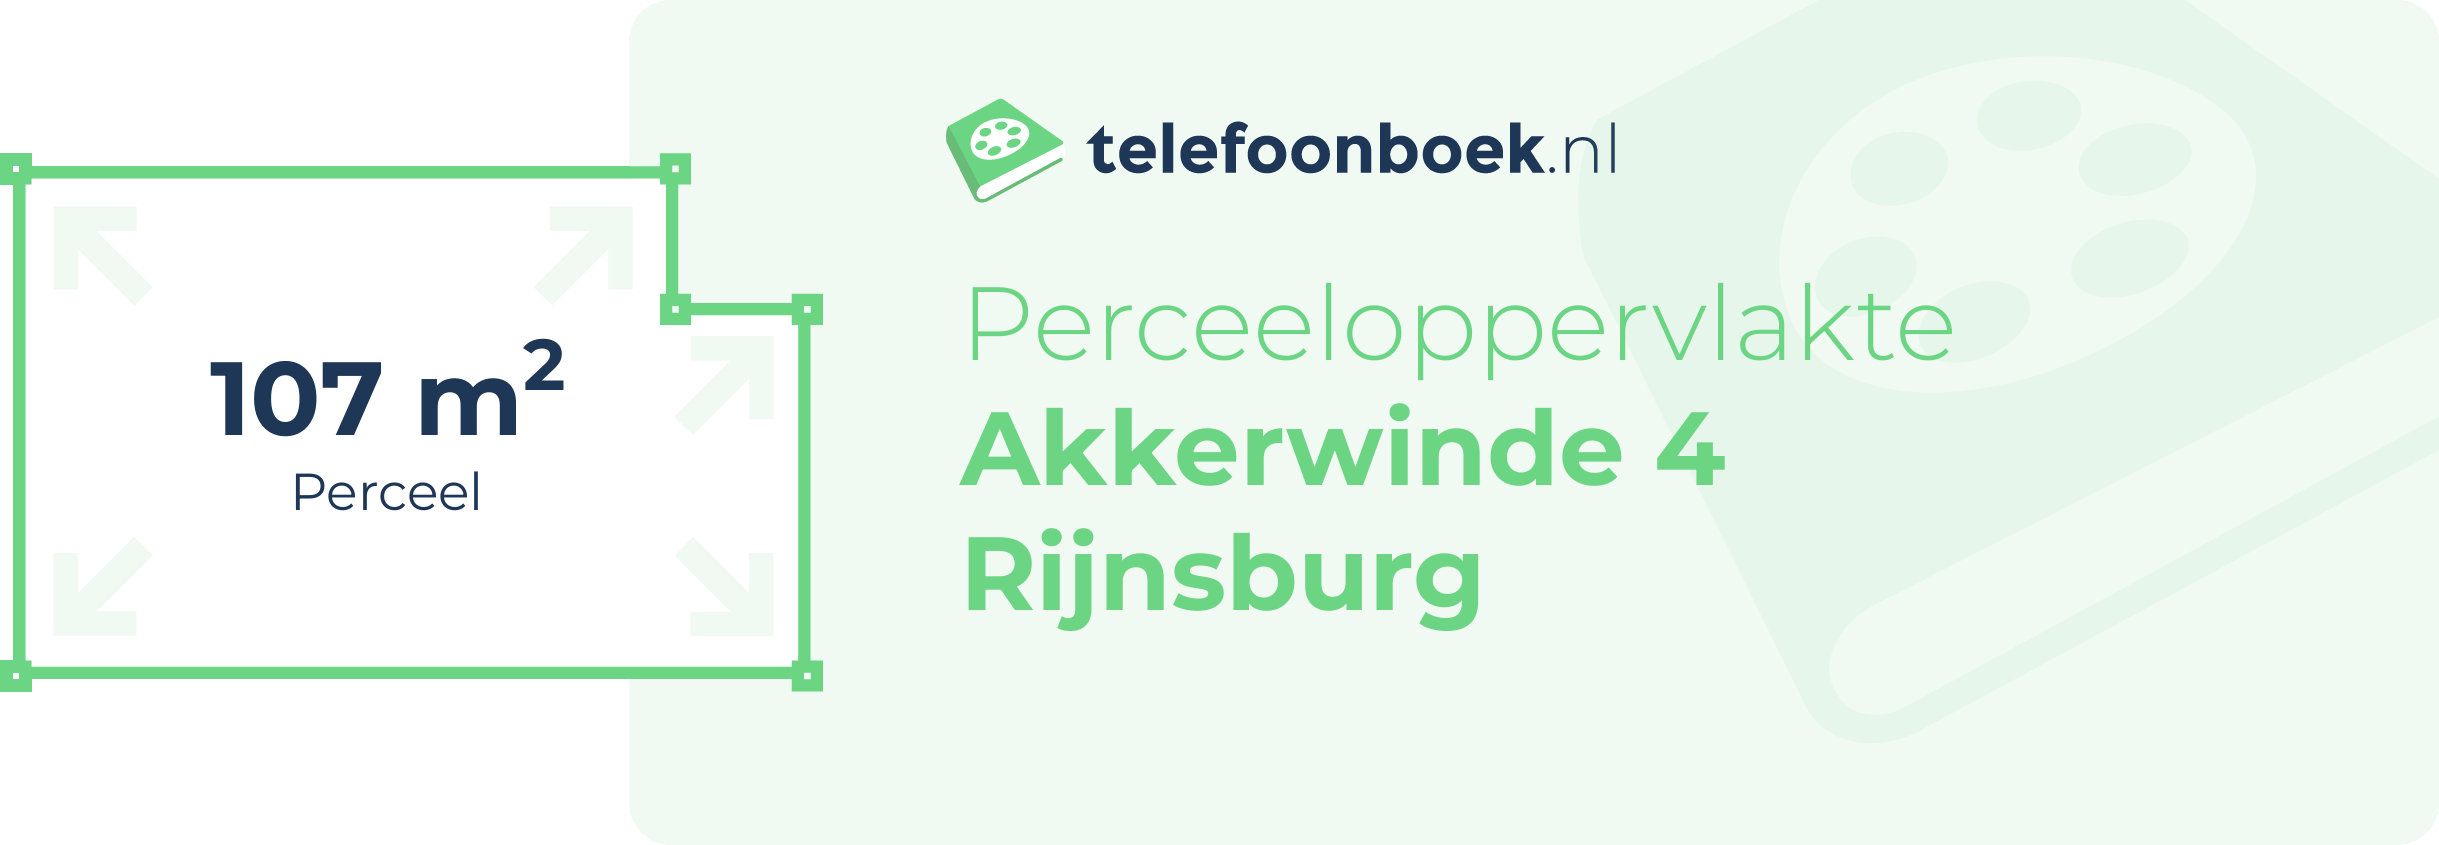 Perceeloppervlakte Akkerwinde 4 Rijnsburg